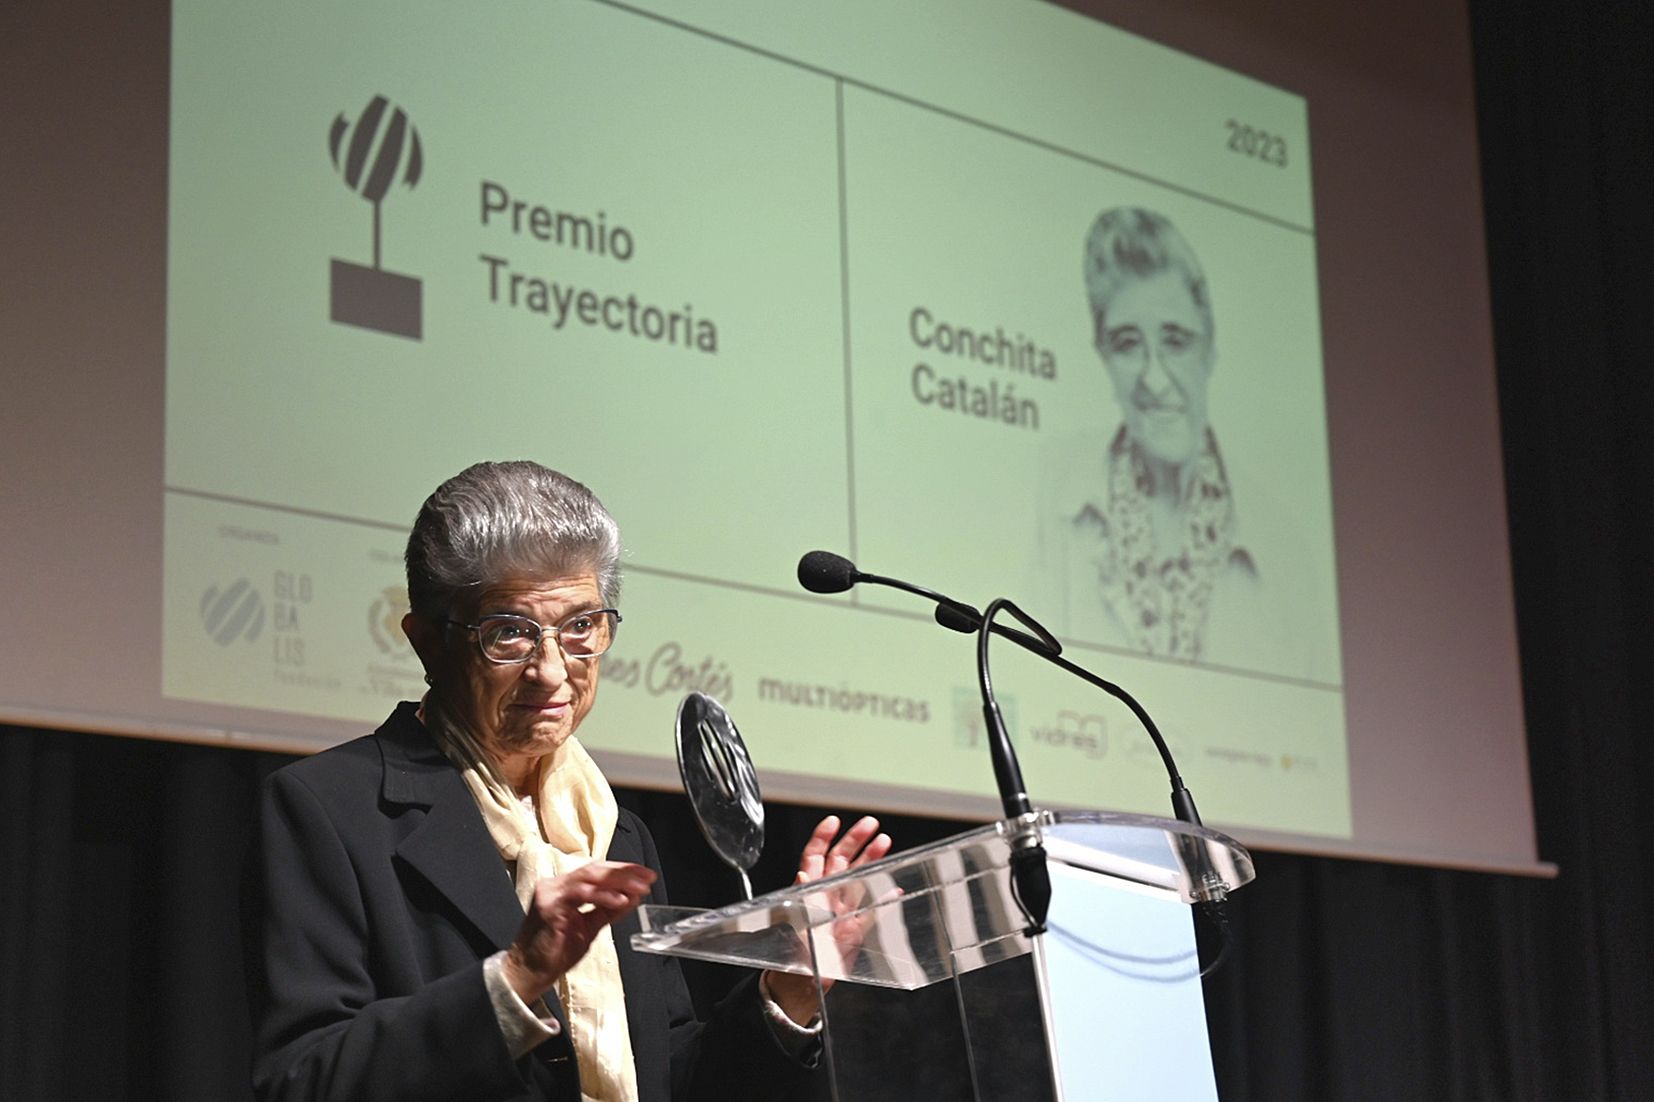 Premio Trajectoria Conchita Catal�n Premis Globalis 2023 (3).JPG